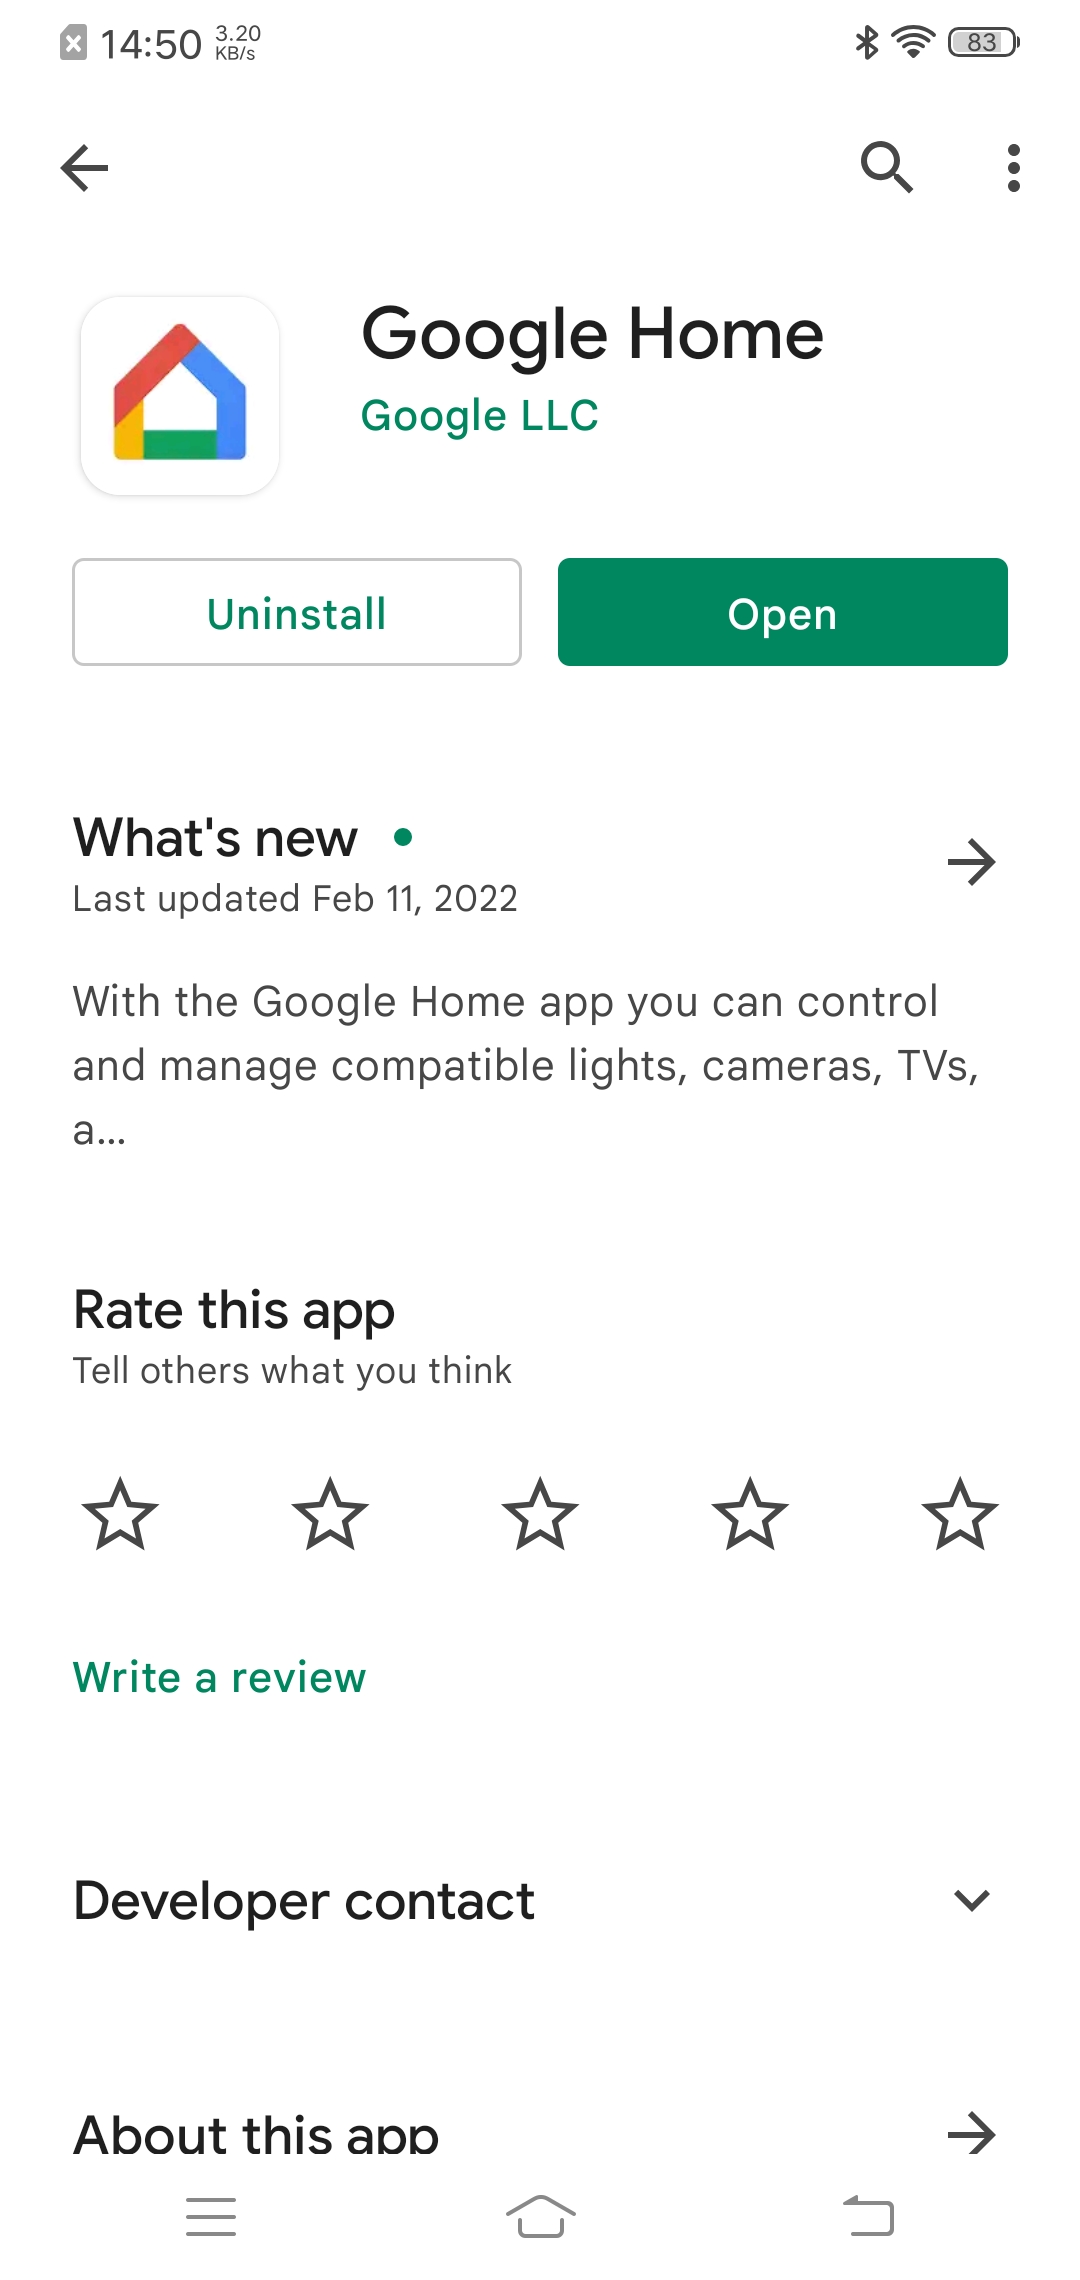 Google Home by Google LLC